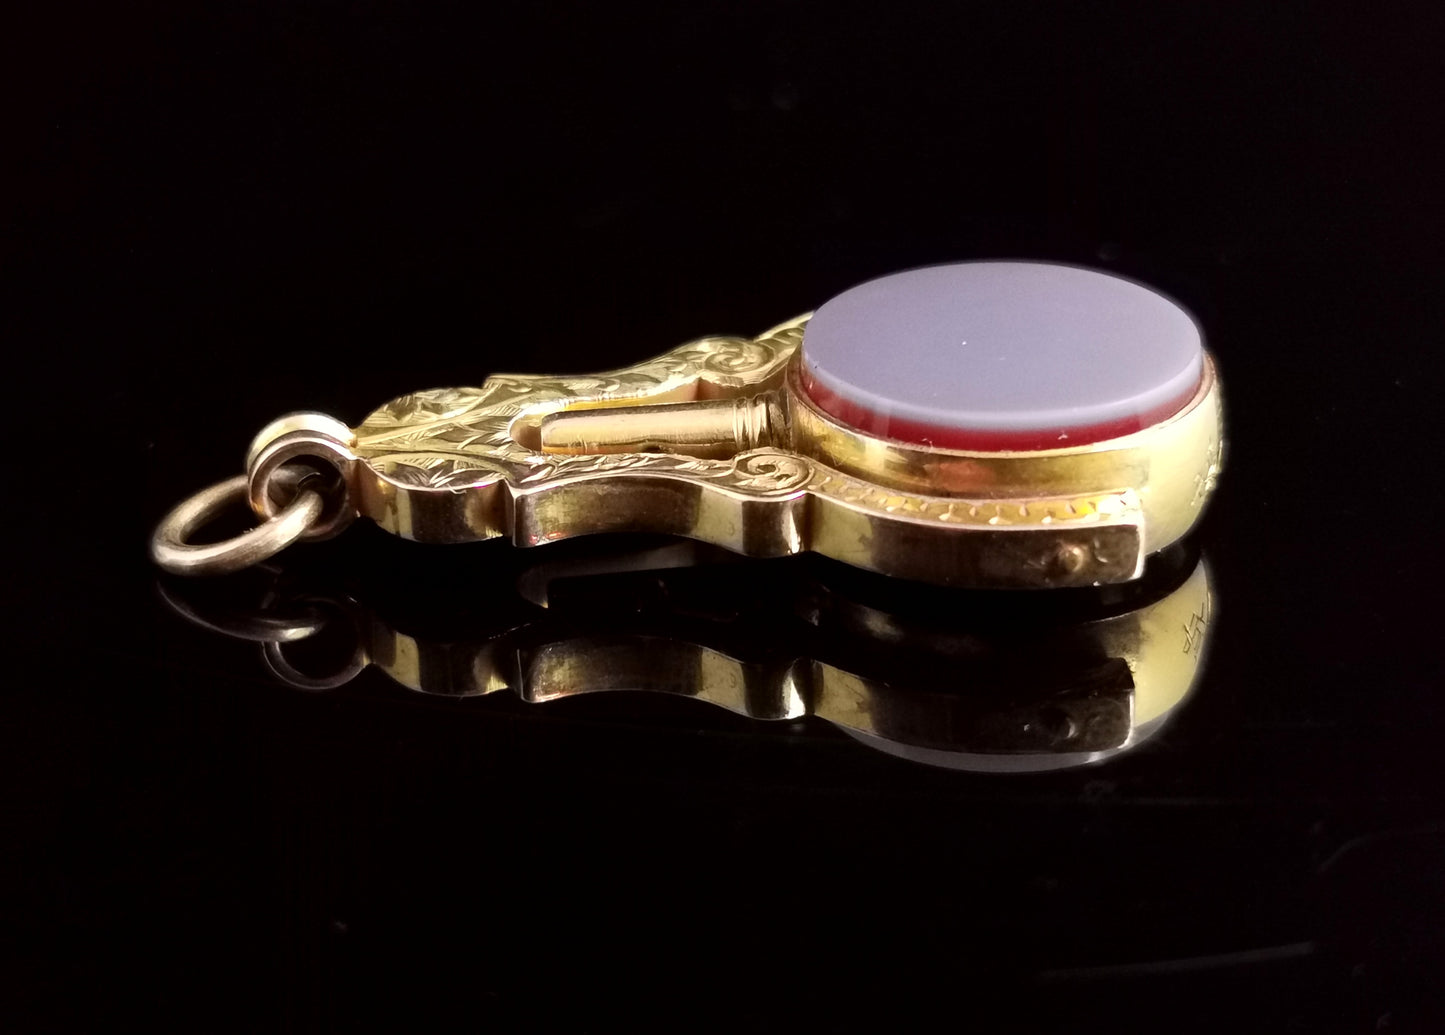 Victorian 9ct gold Watch key seal fob pendant, Masonic, bloodstone and sardonyx